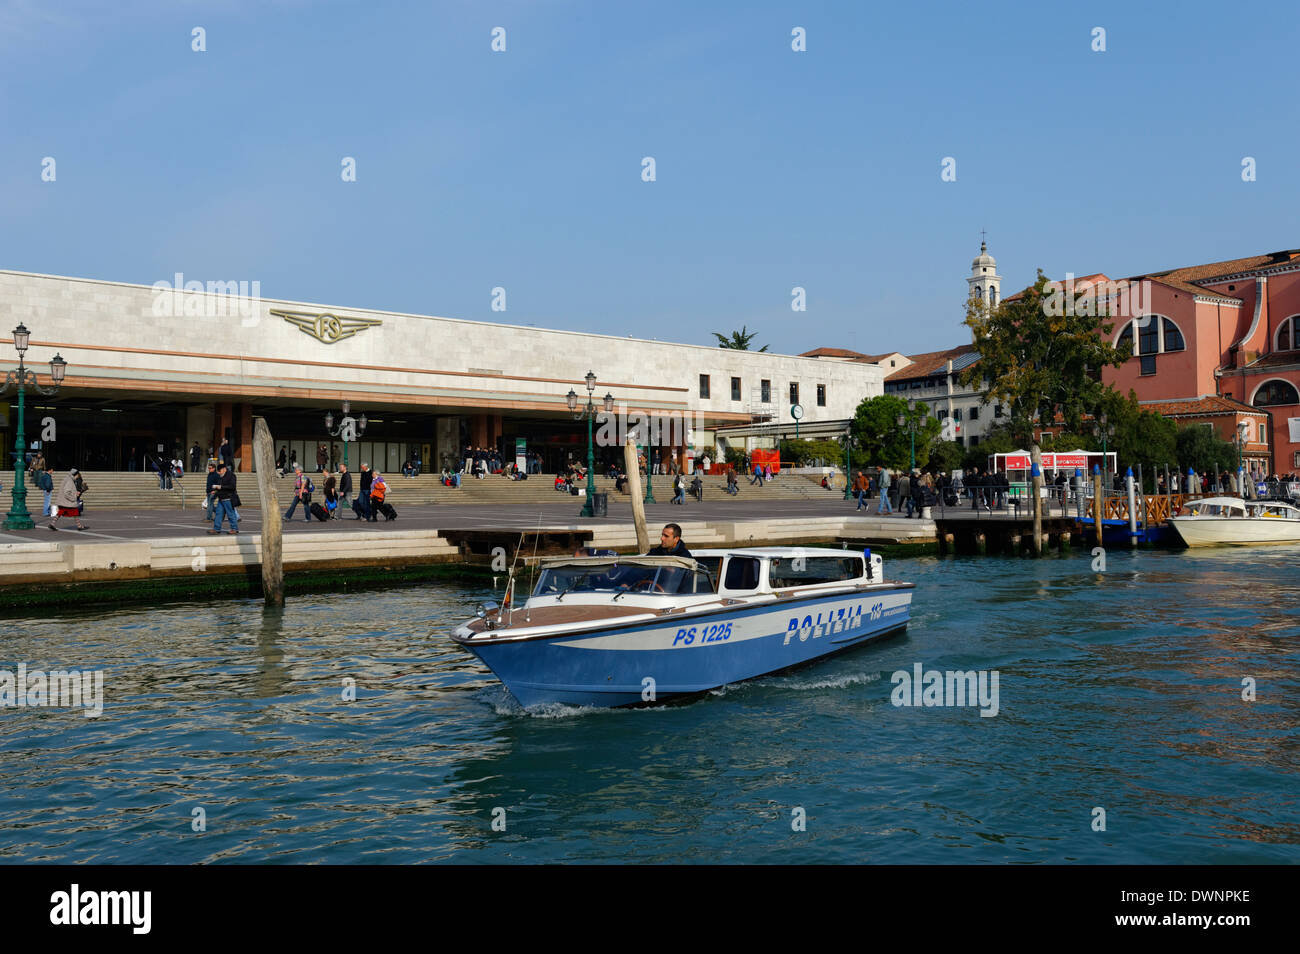 Police boat in front of the Santa Lucia train station, Cannaregio, Venice, Veneto, Italy Stock Photo